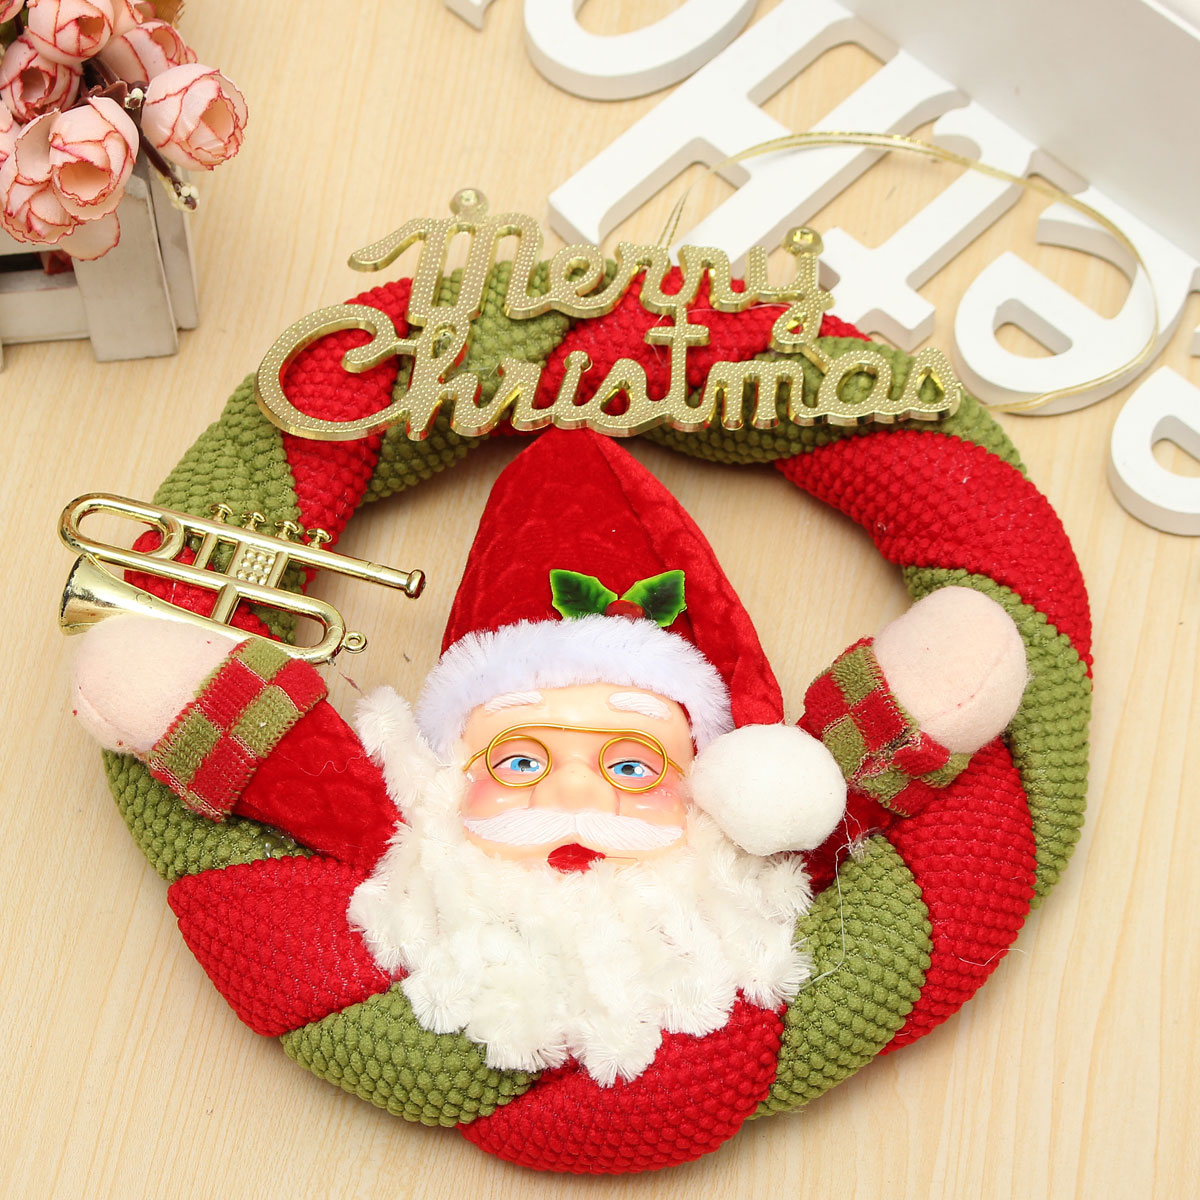 Christmas-Santa-Claus-Ornaments-Festival-Party-Xmas-Tree-Hanging-Decoration-1002250-5